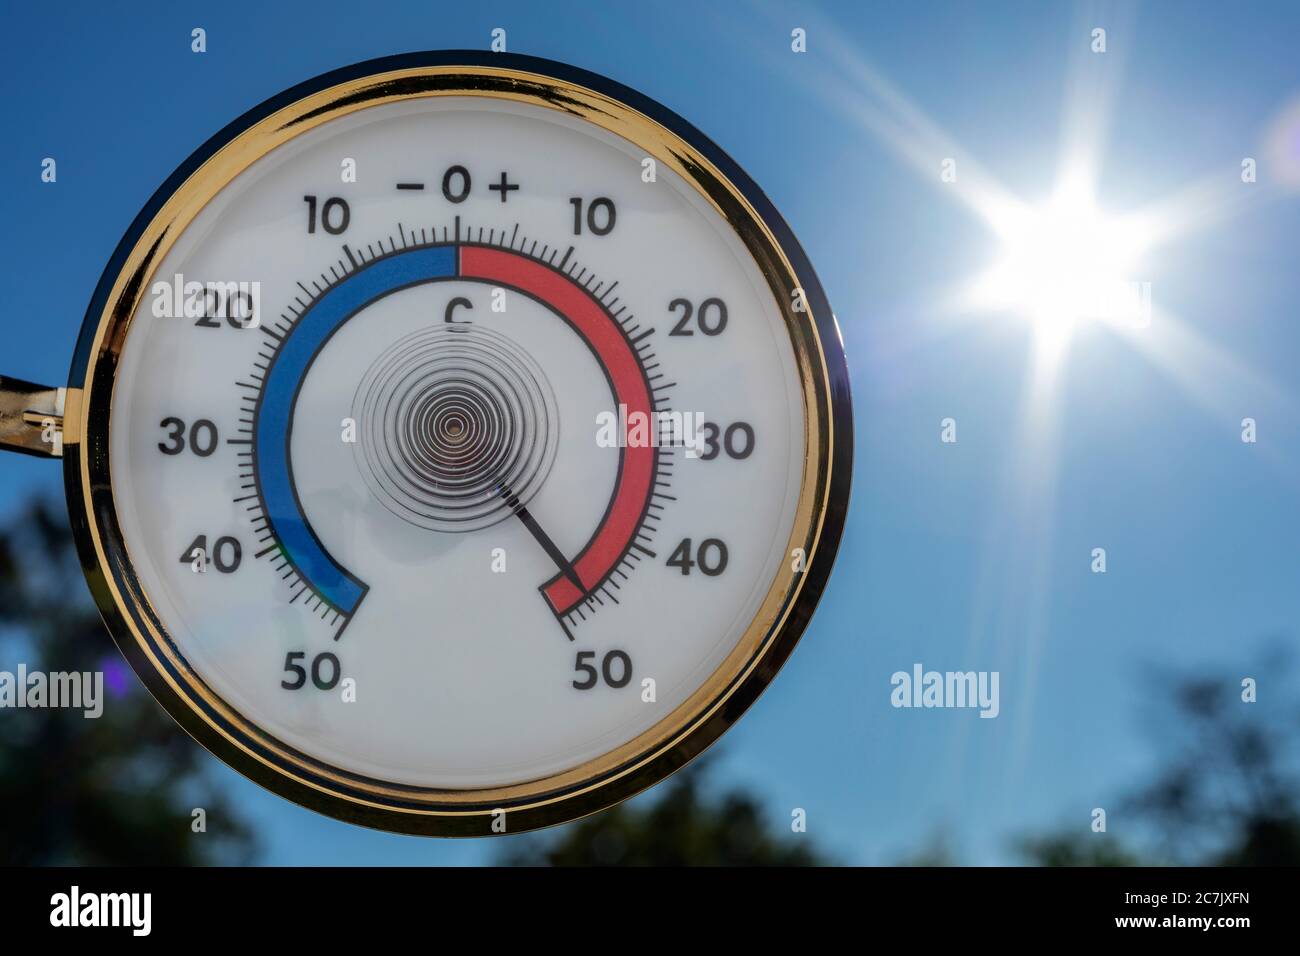 https://c8.alamy.com/comp/2C7JXFN/outdoor-thermometer-465-degrees-celsius-symbol-climate-change-2C7JXFN.jpg